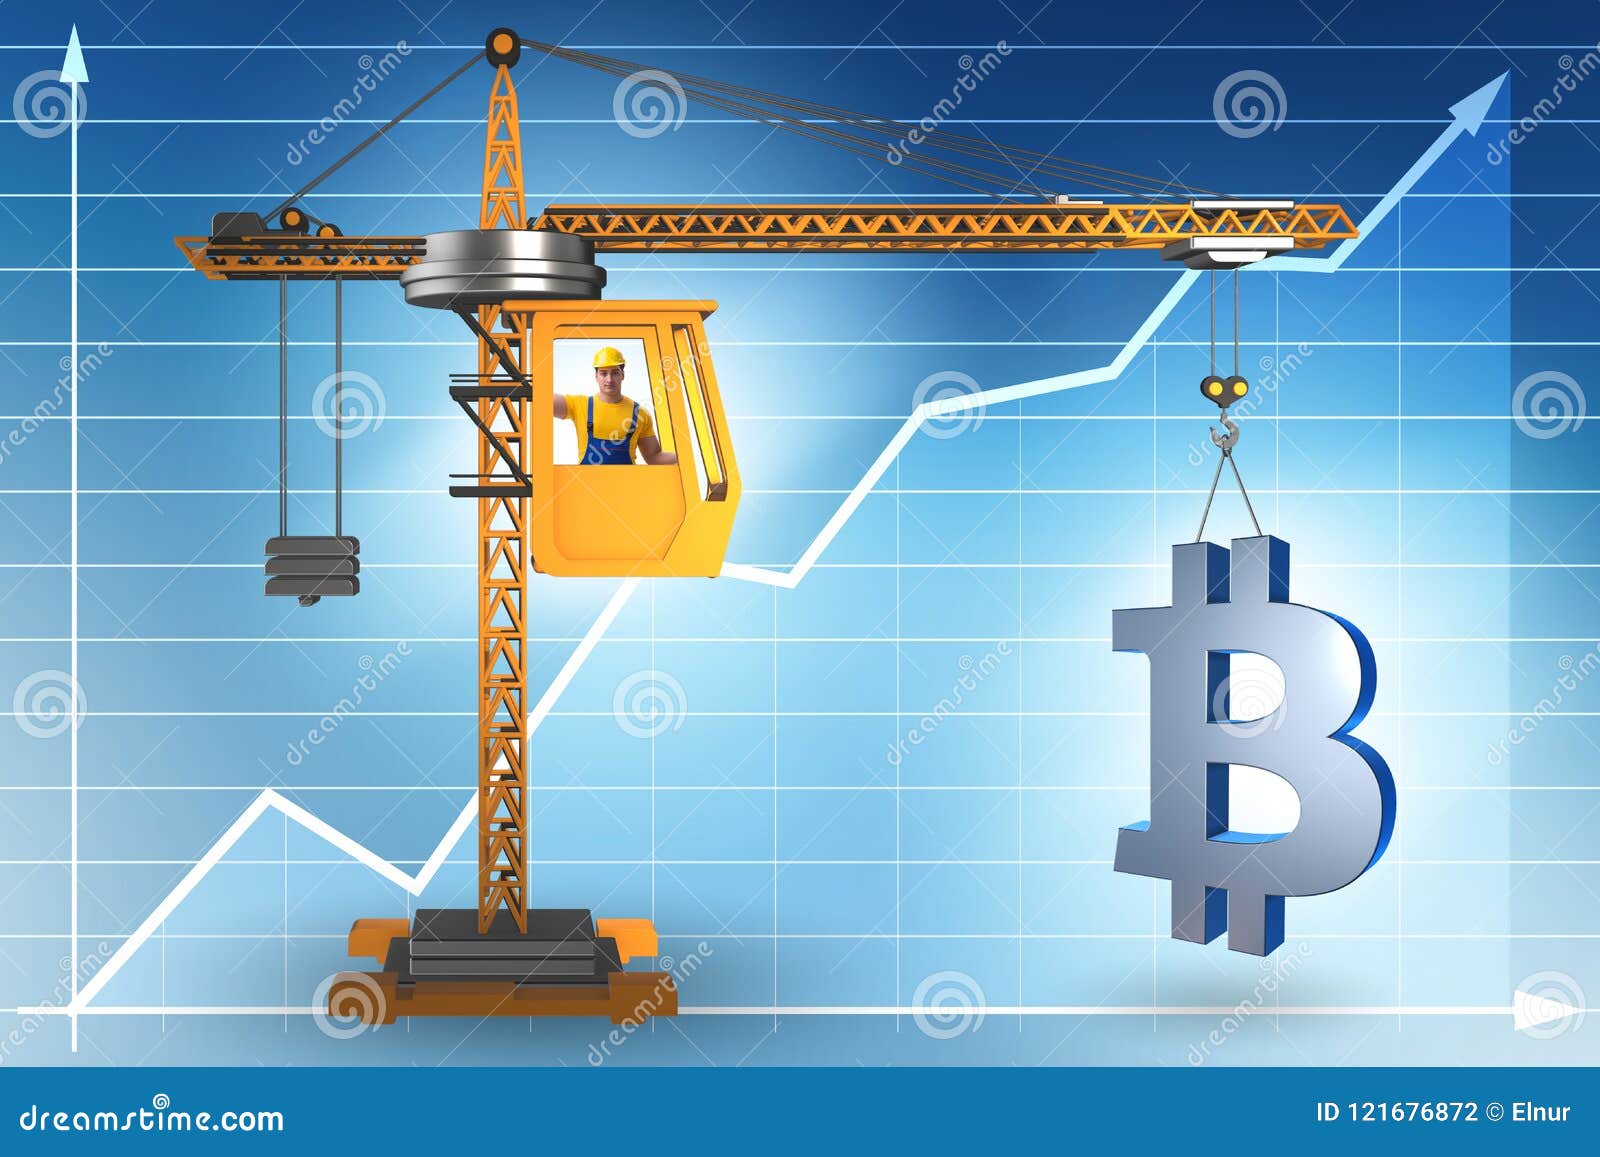 What is bitcoin cranes павлодар обмен валют на сегодня